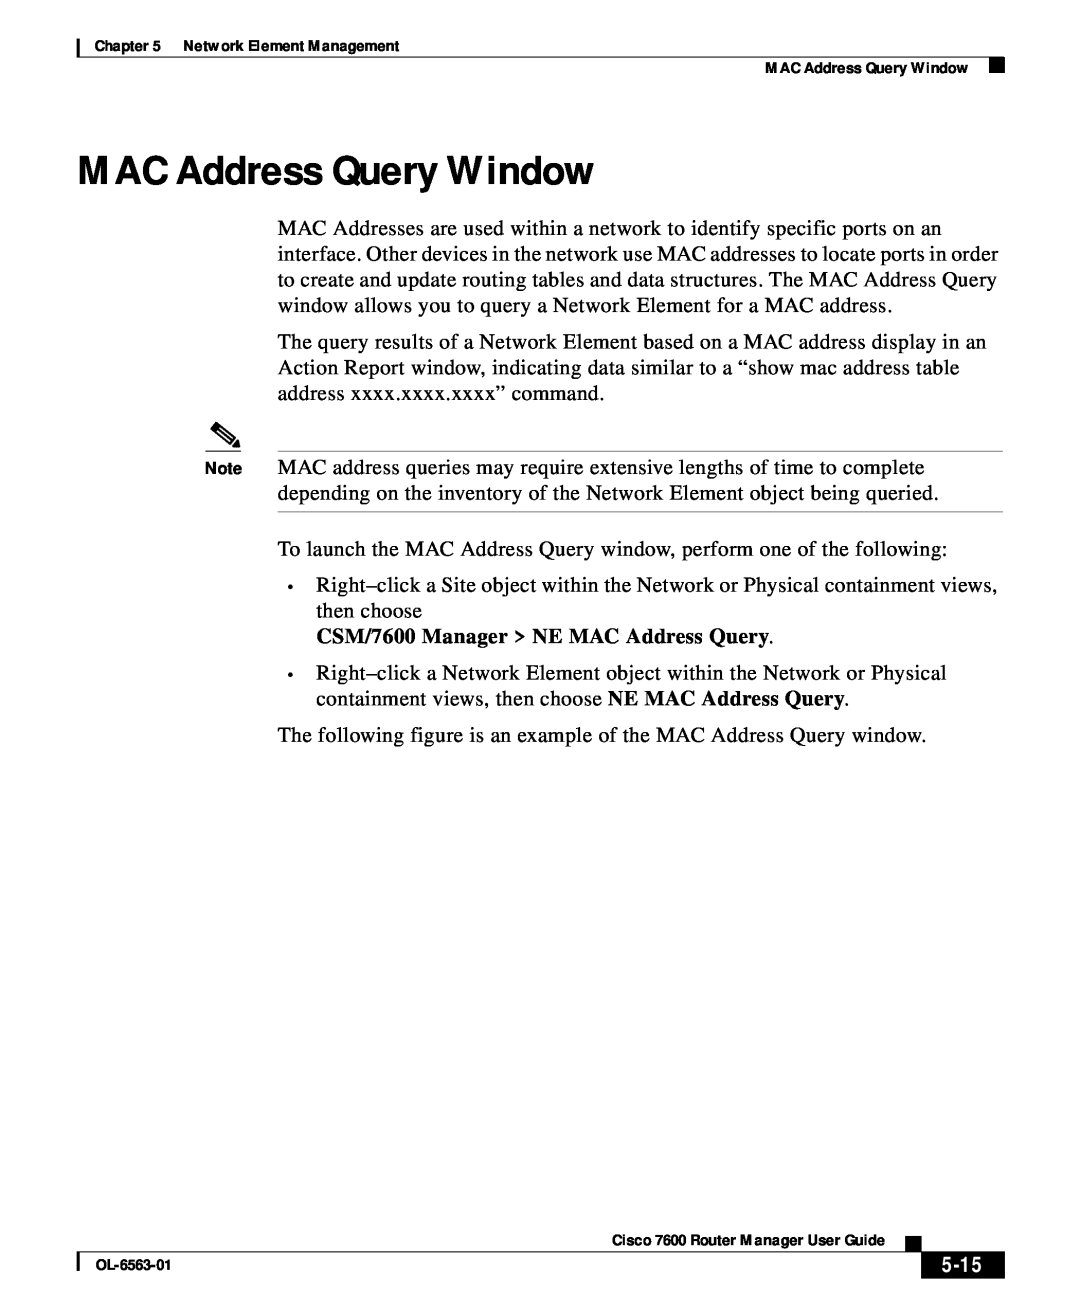 Cisco Systems OL-6563-01 manual MAC Address Query Window, CSM/7600 Manager NE MAC Address Query, 5-15 